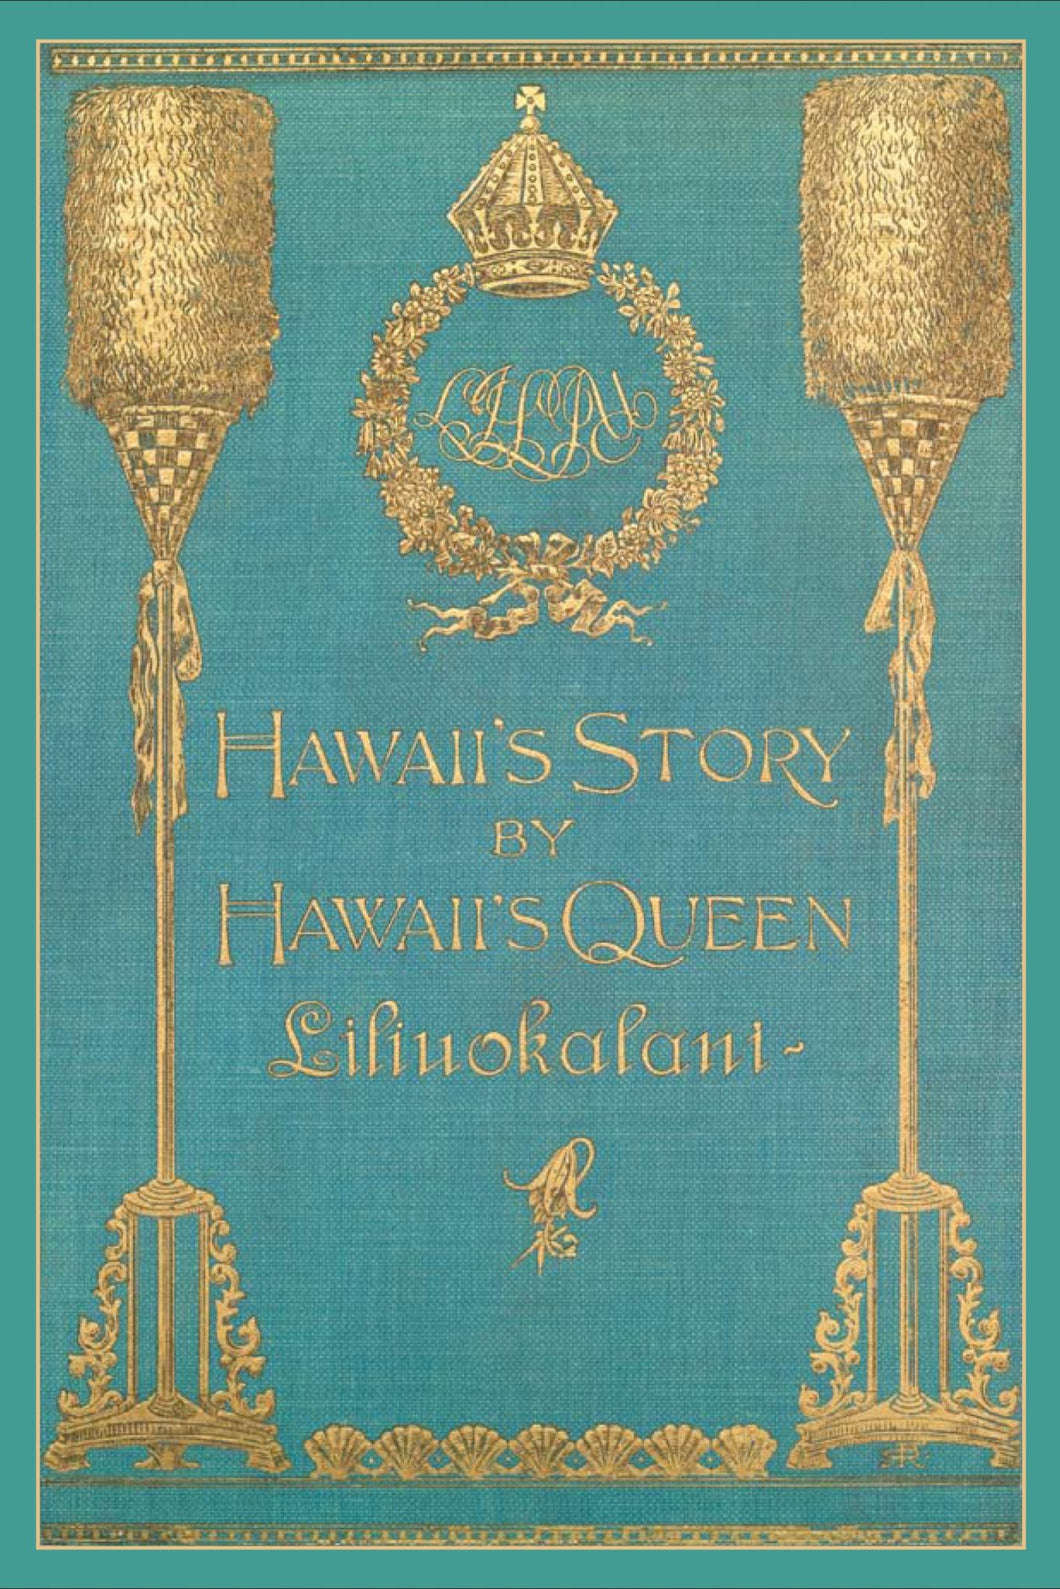 Hawaii's Story by Hawaii's Queen (Hardcover) by Liliuokalani